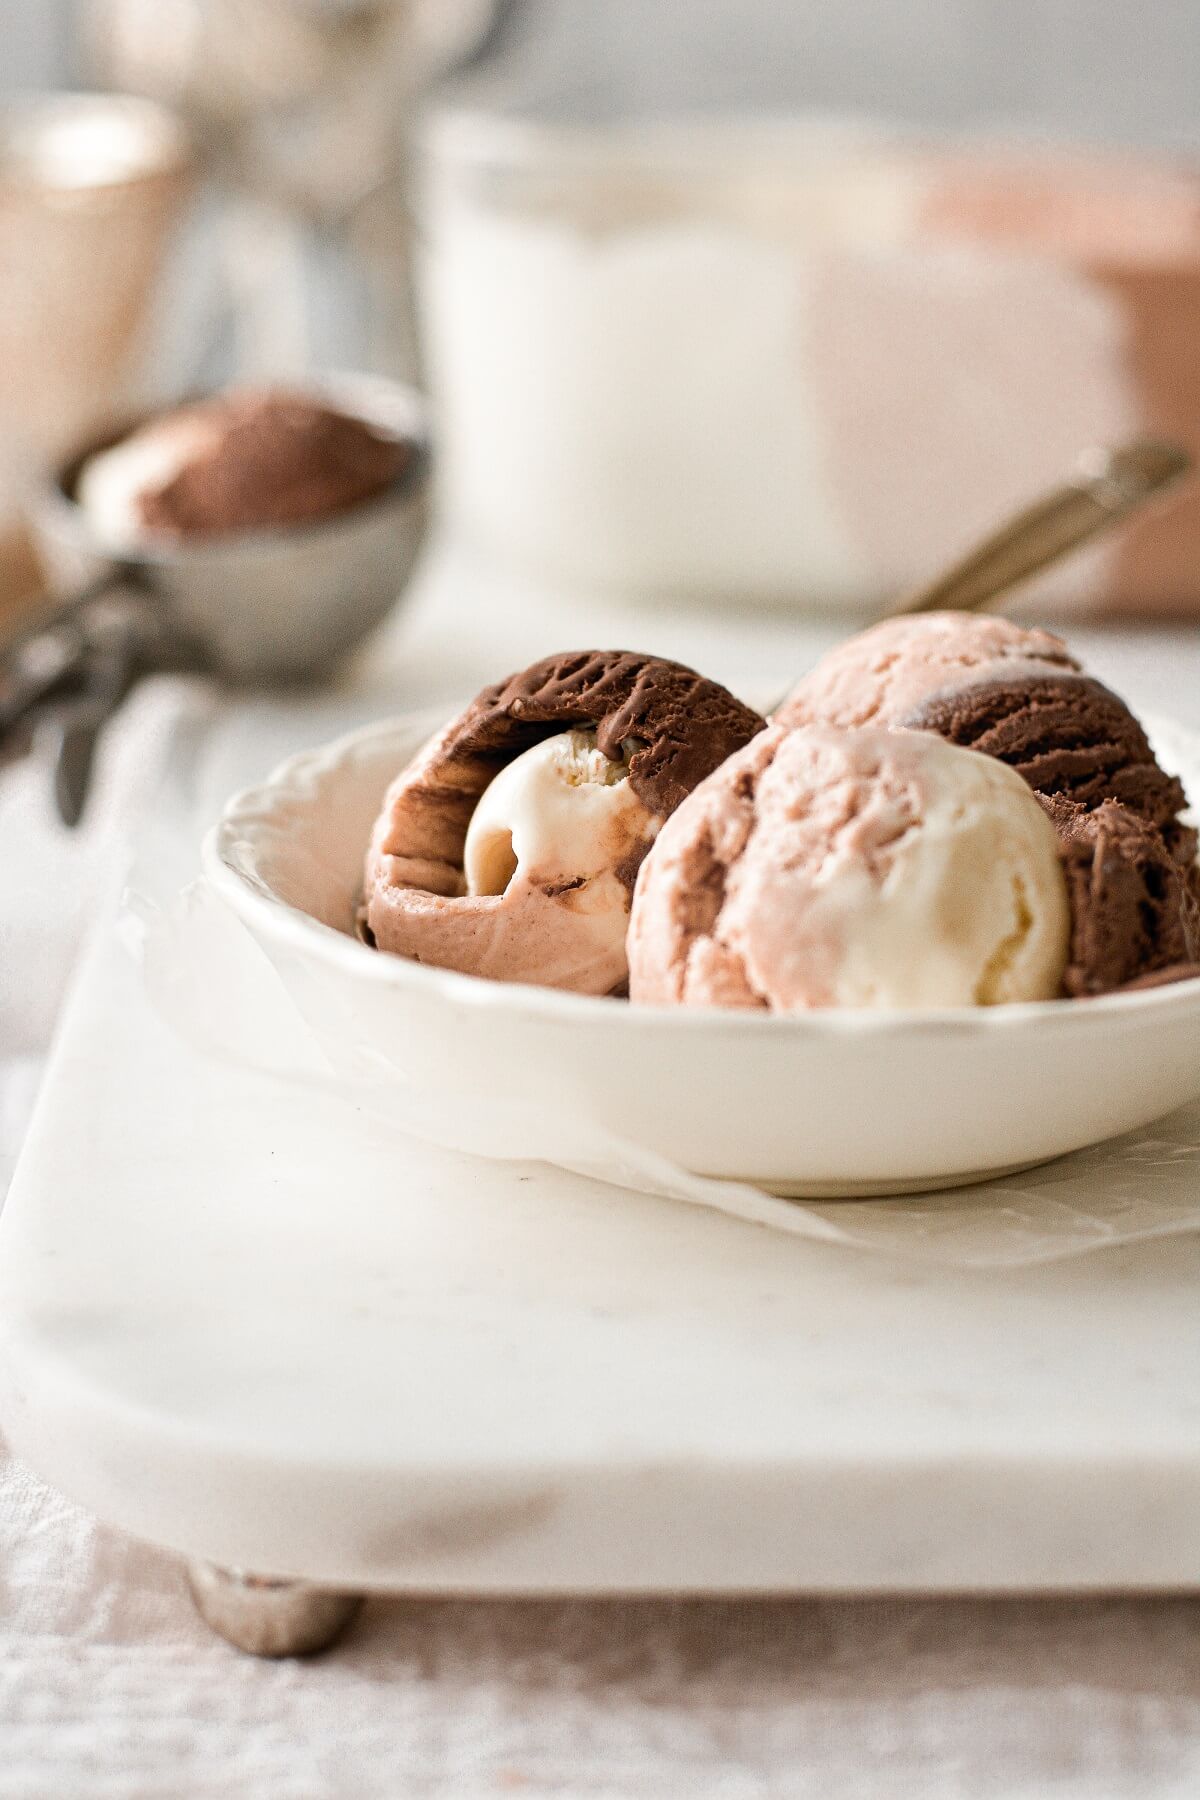 Three scoops of neapolitan ice cream in a white bowl.